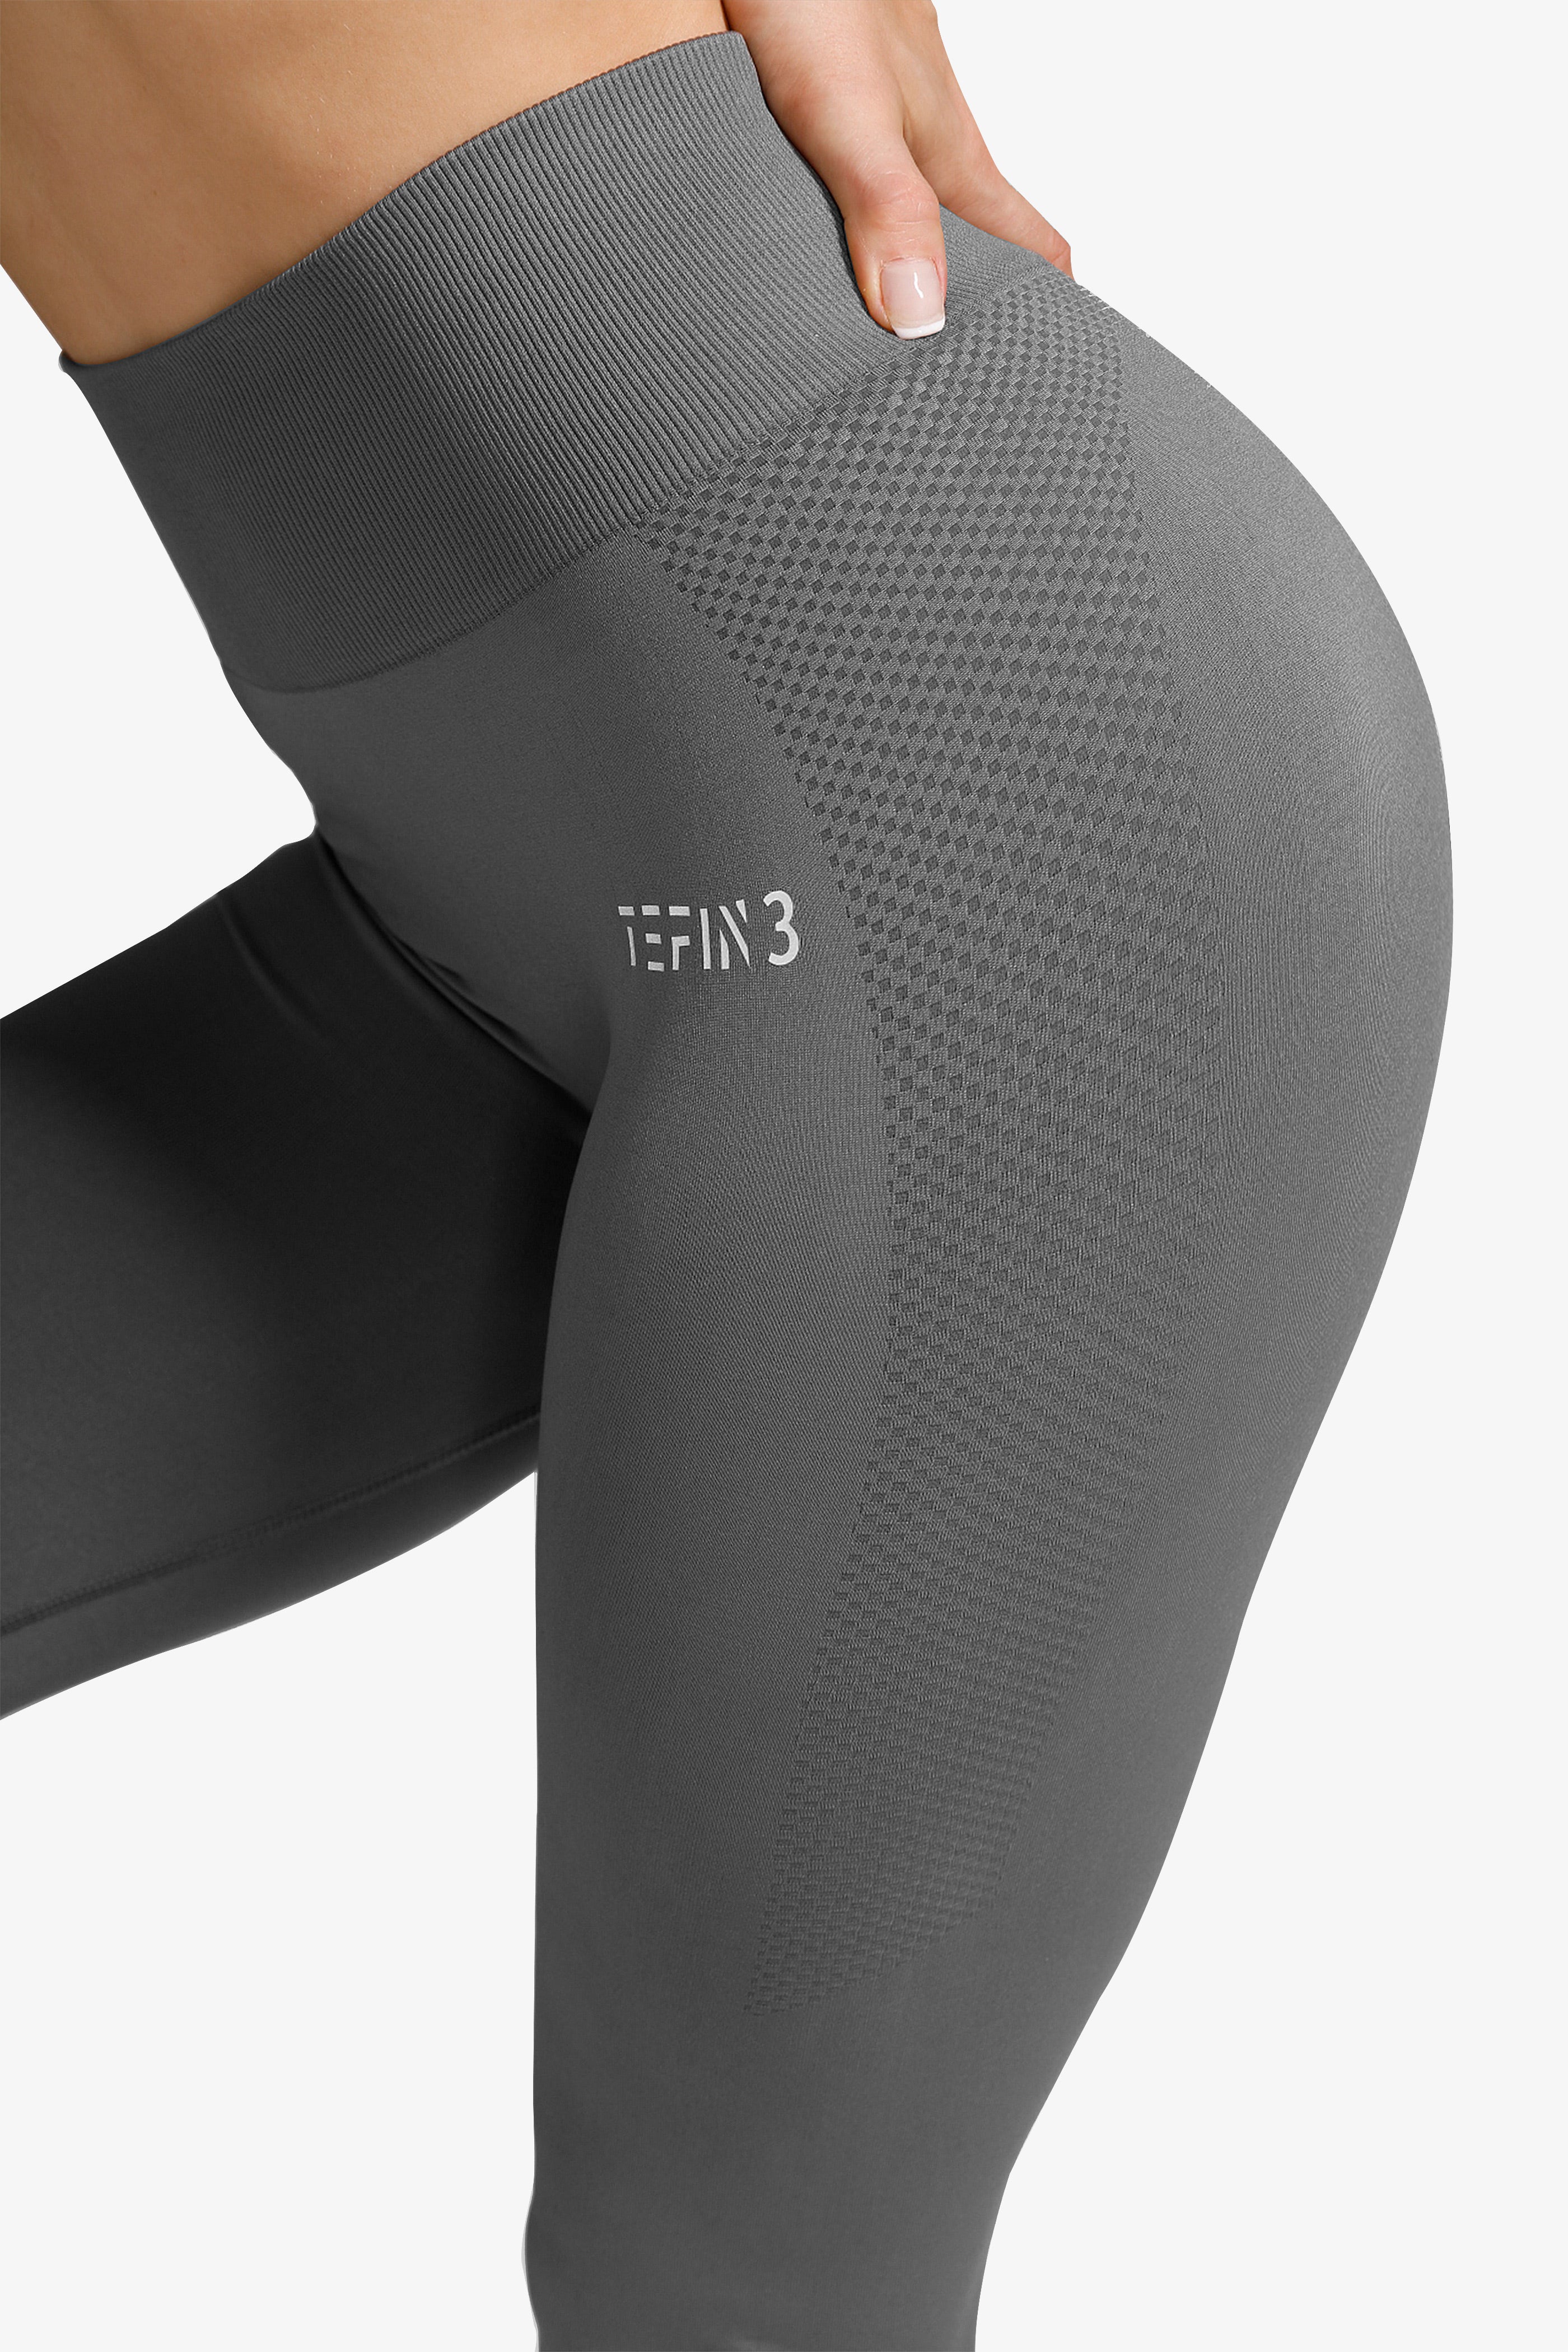 TEFIN3 Comfy Seamless Leggings Grey (6)